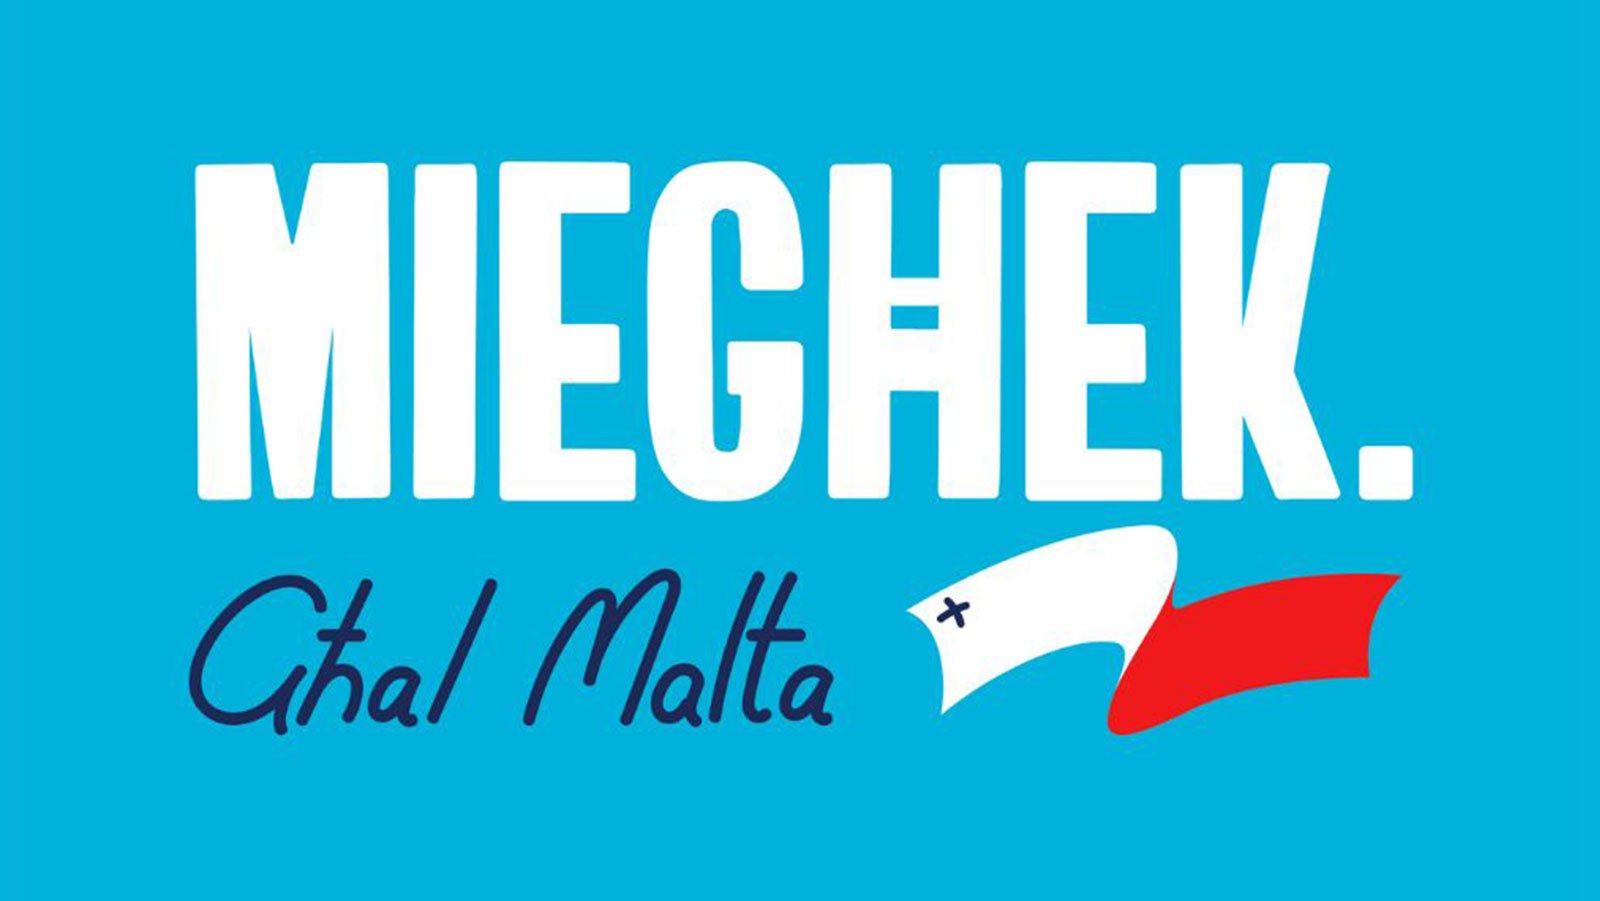 Mieghek ghall-Malta